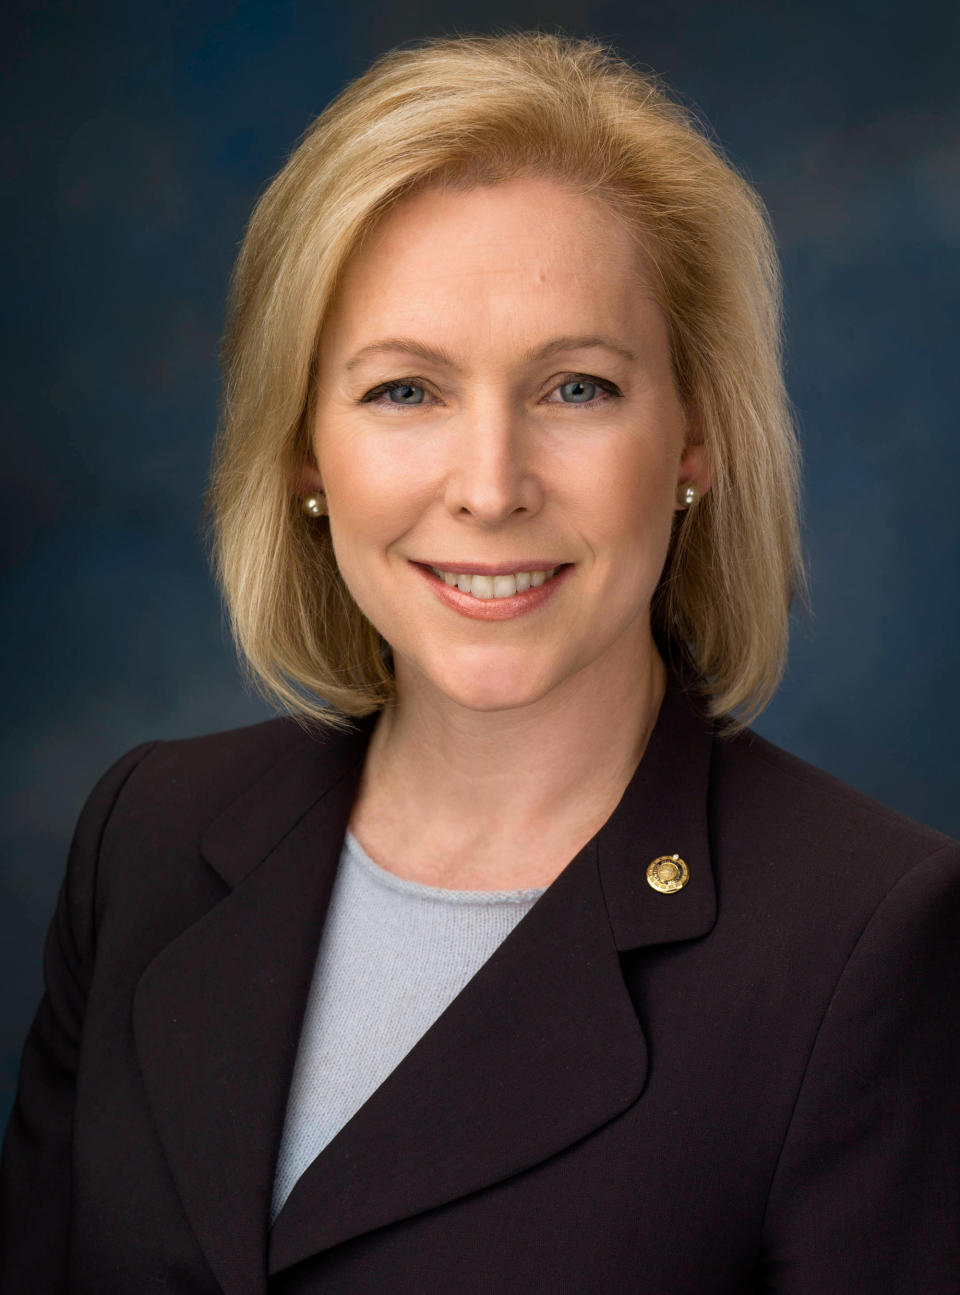 Kirsten Gillibrand, U.S. senator for New York